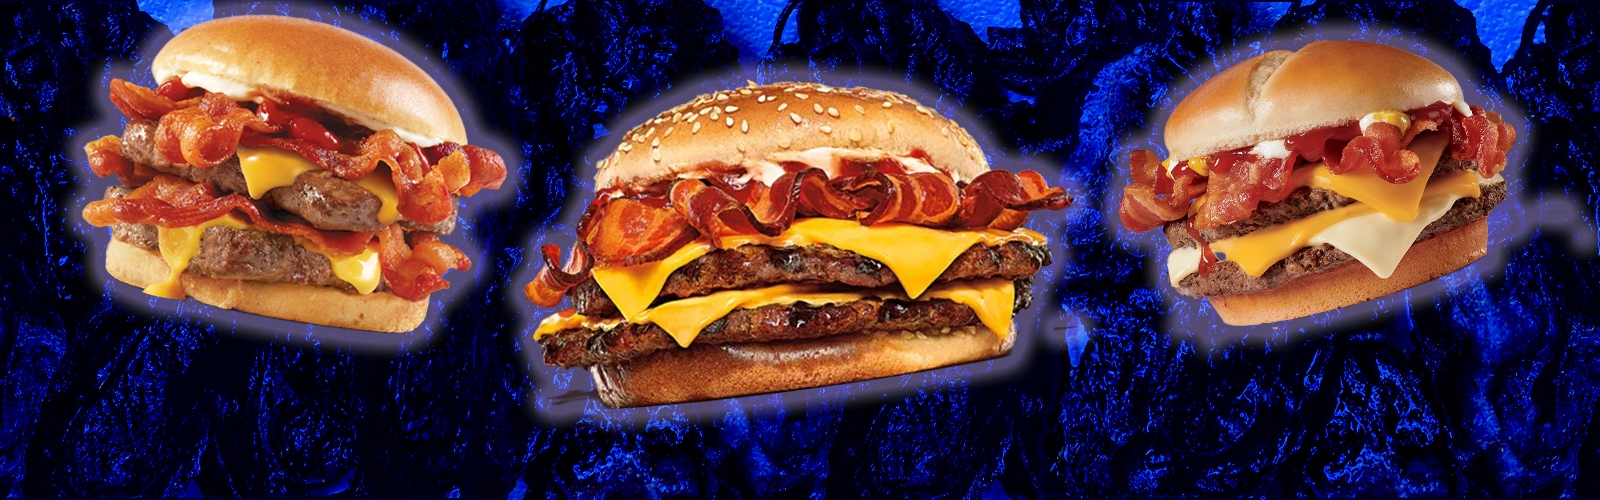 giant bacon burgers